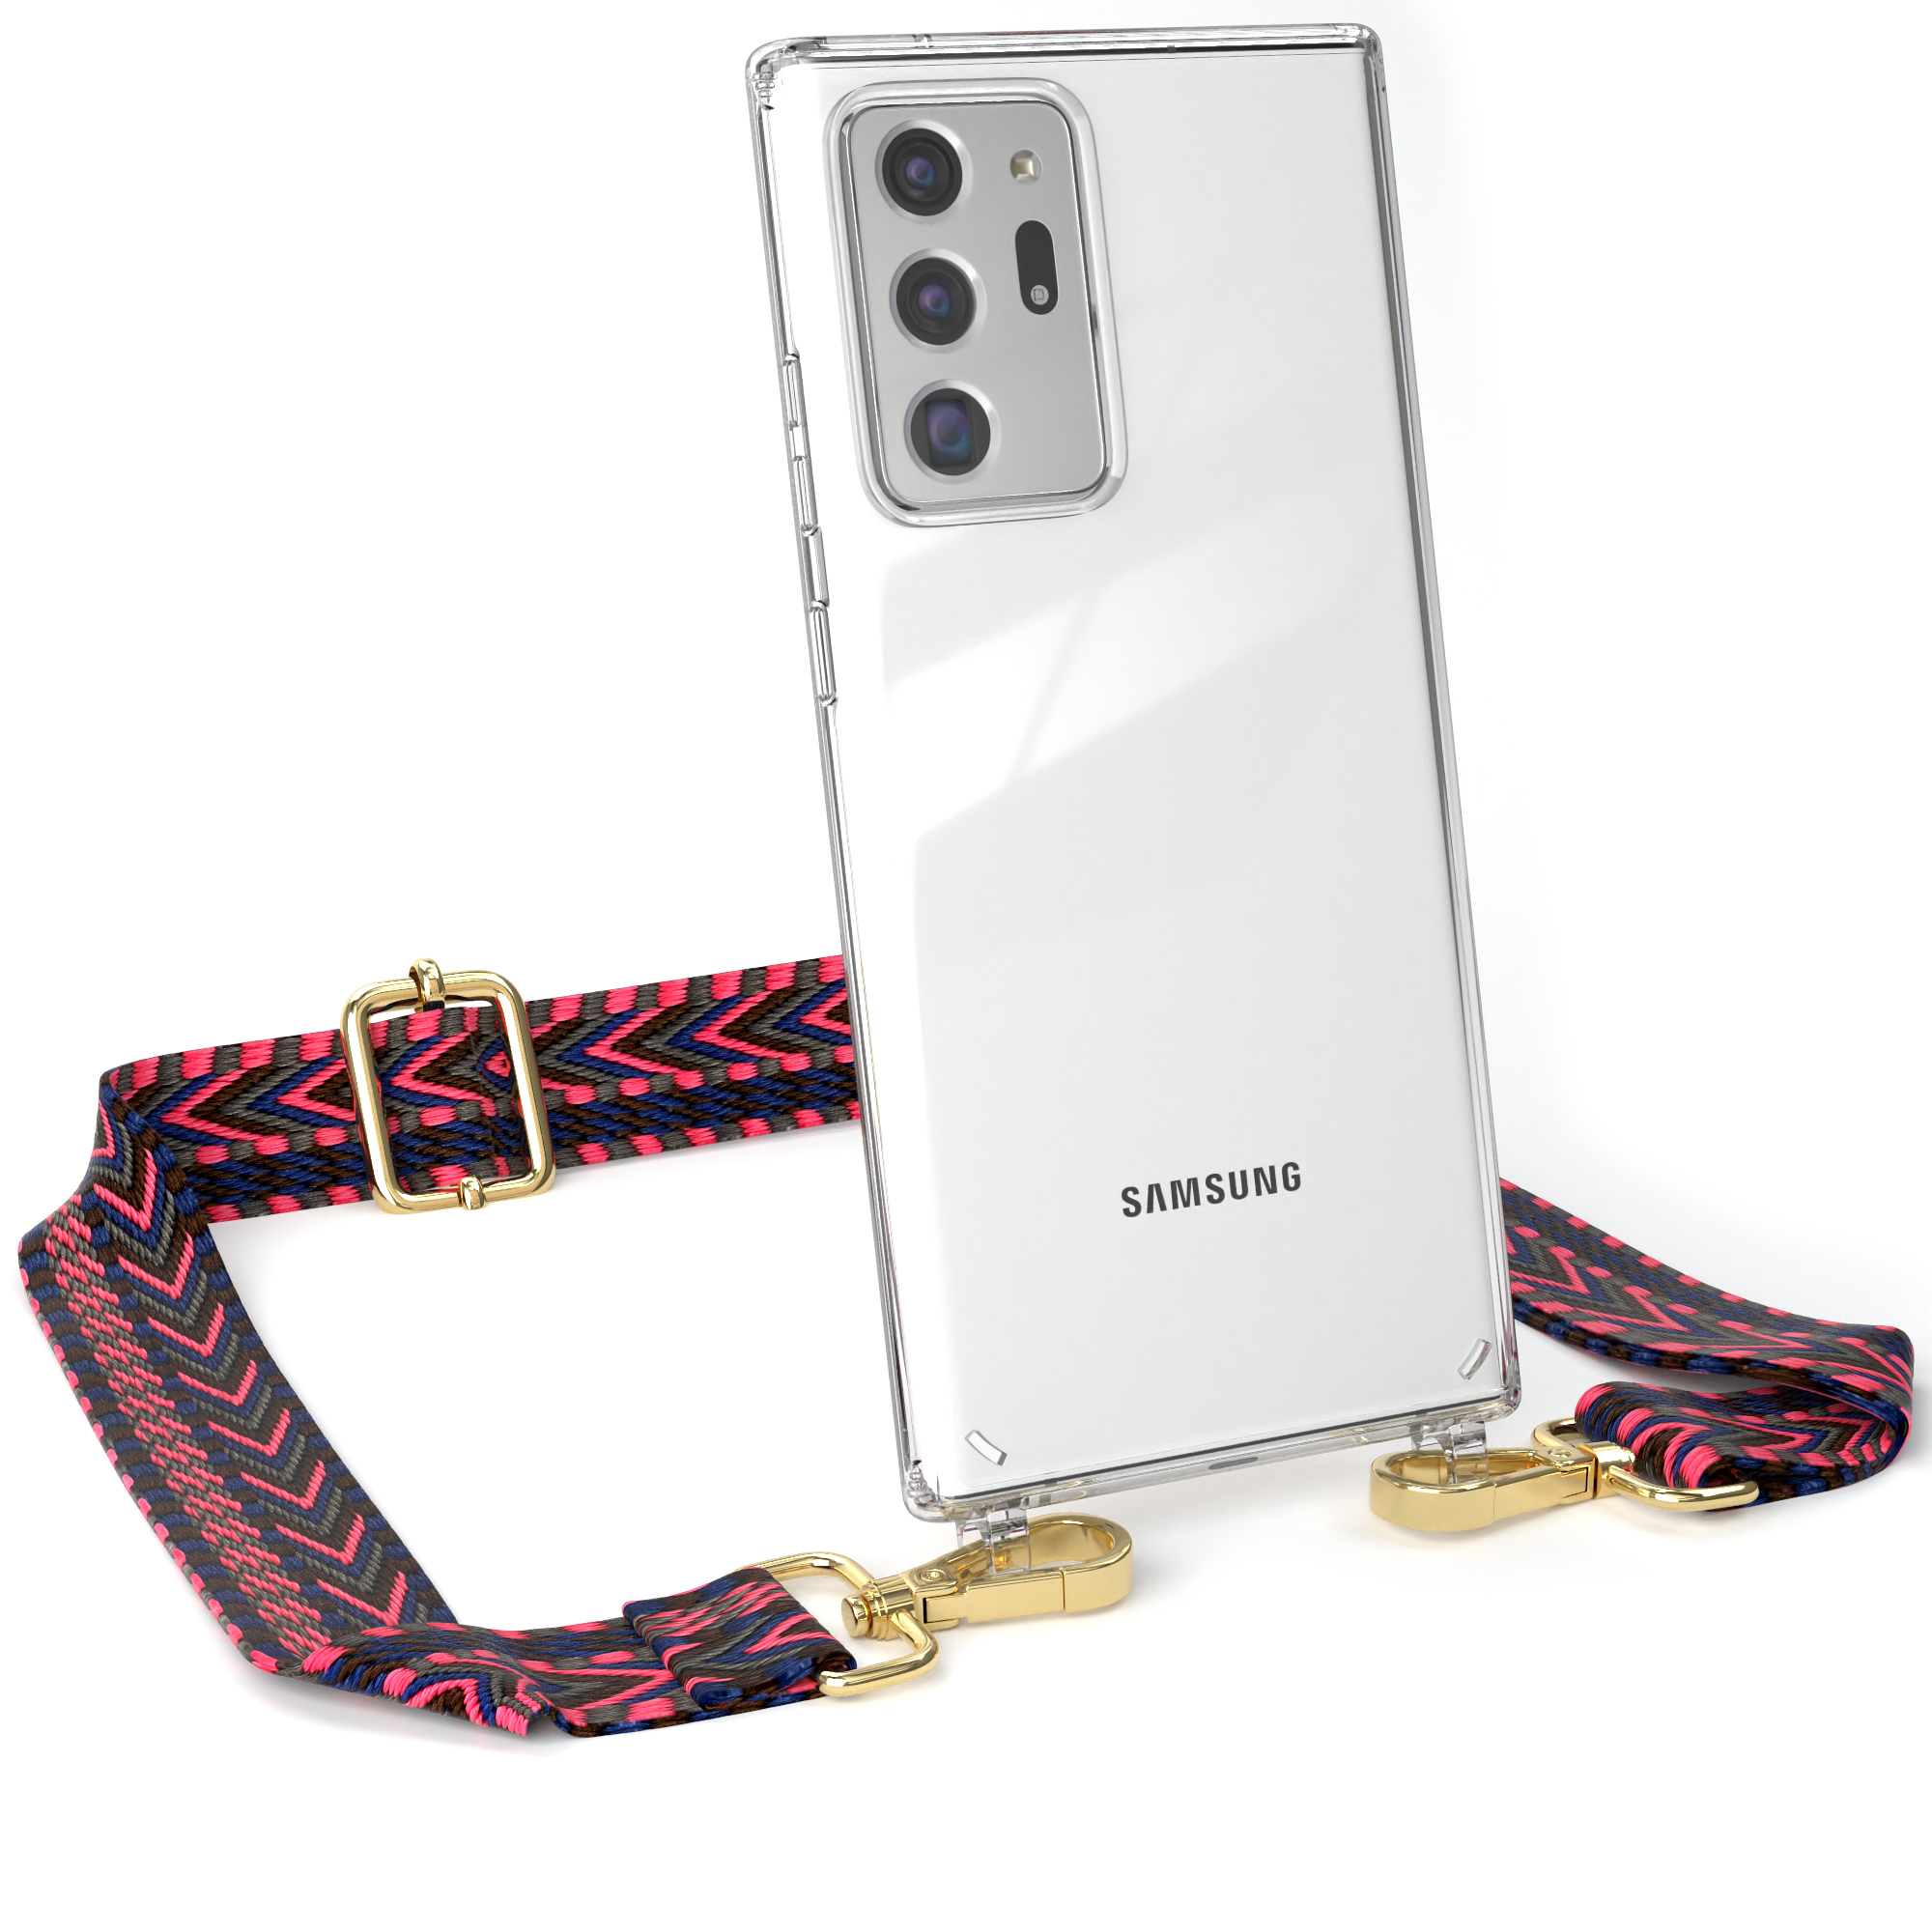 EAZY CASE Transparente Handyhülle / Samsung, Style, 20 mit Ultra Kordel Pink Note Galaxy Boho 20 Ultra / Note Umhängetasche, Blau 5G